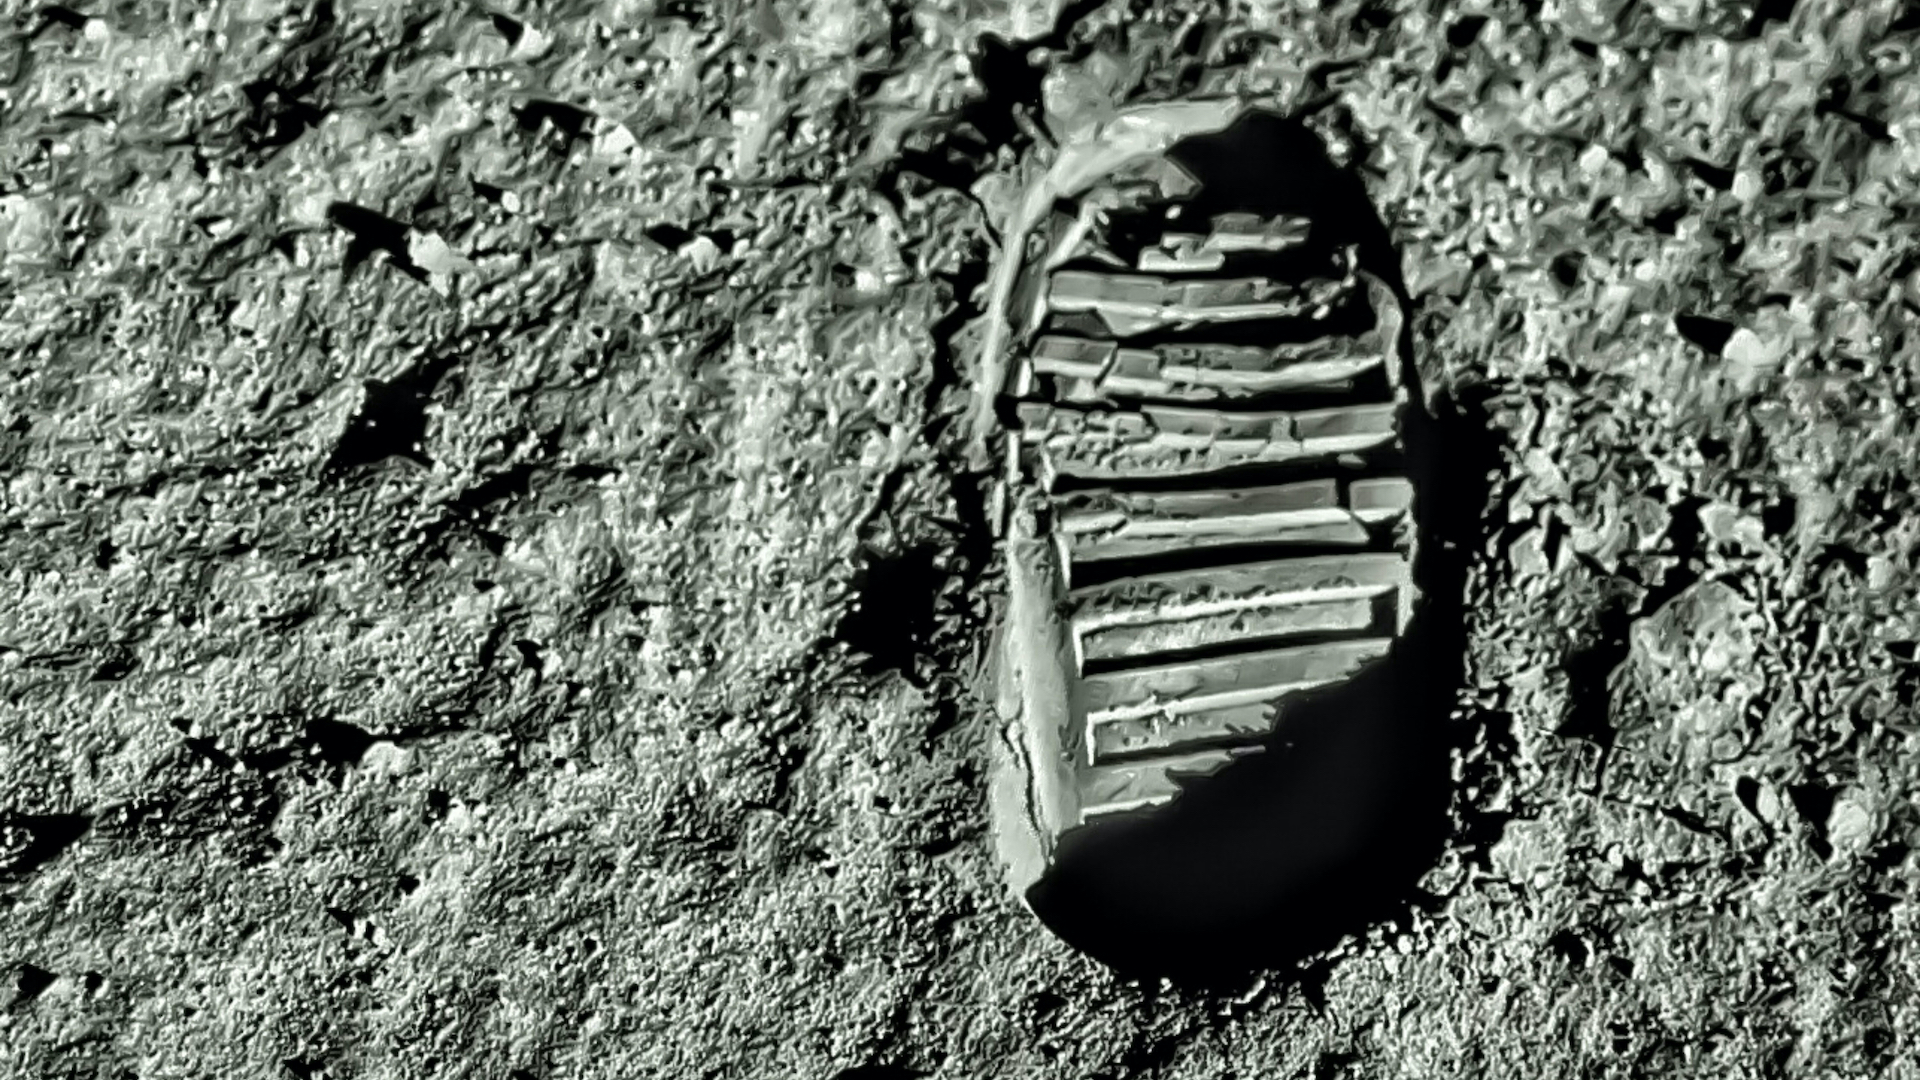 A footprint on the moon's surface 